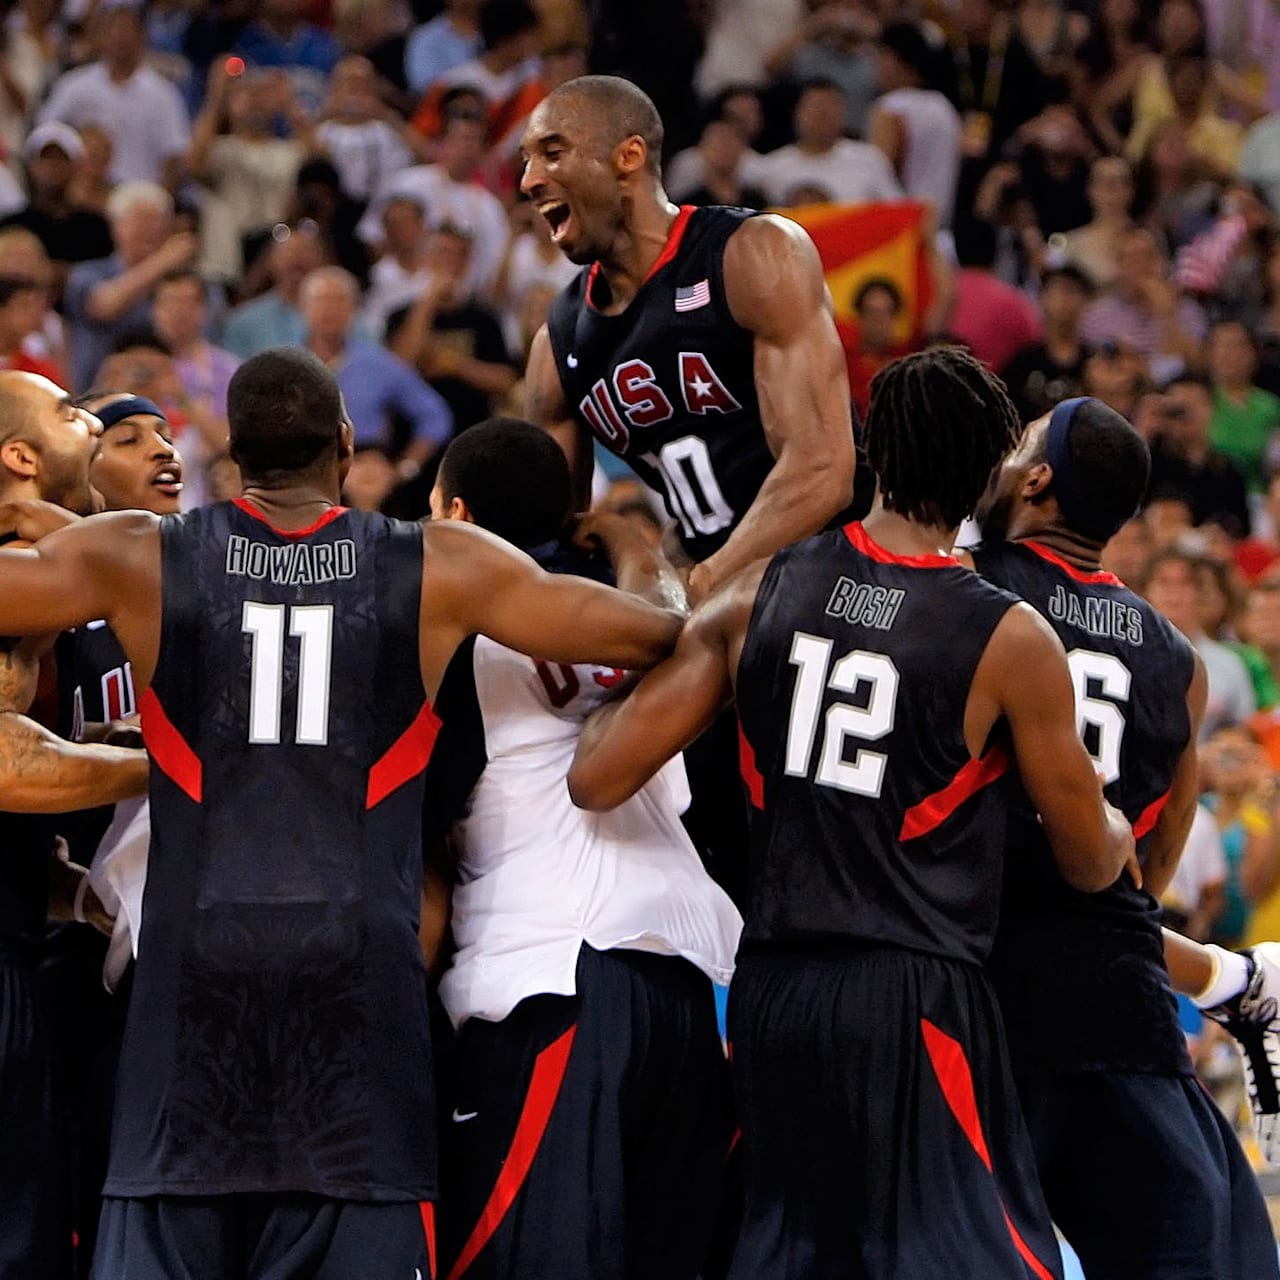 Beijing 2008 Olympic Games USA Basketball Kobe Bryant Jersey